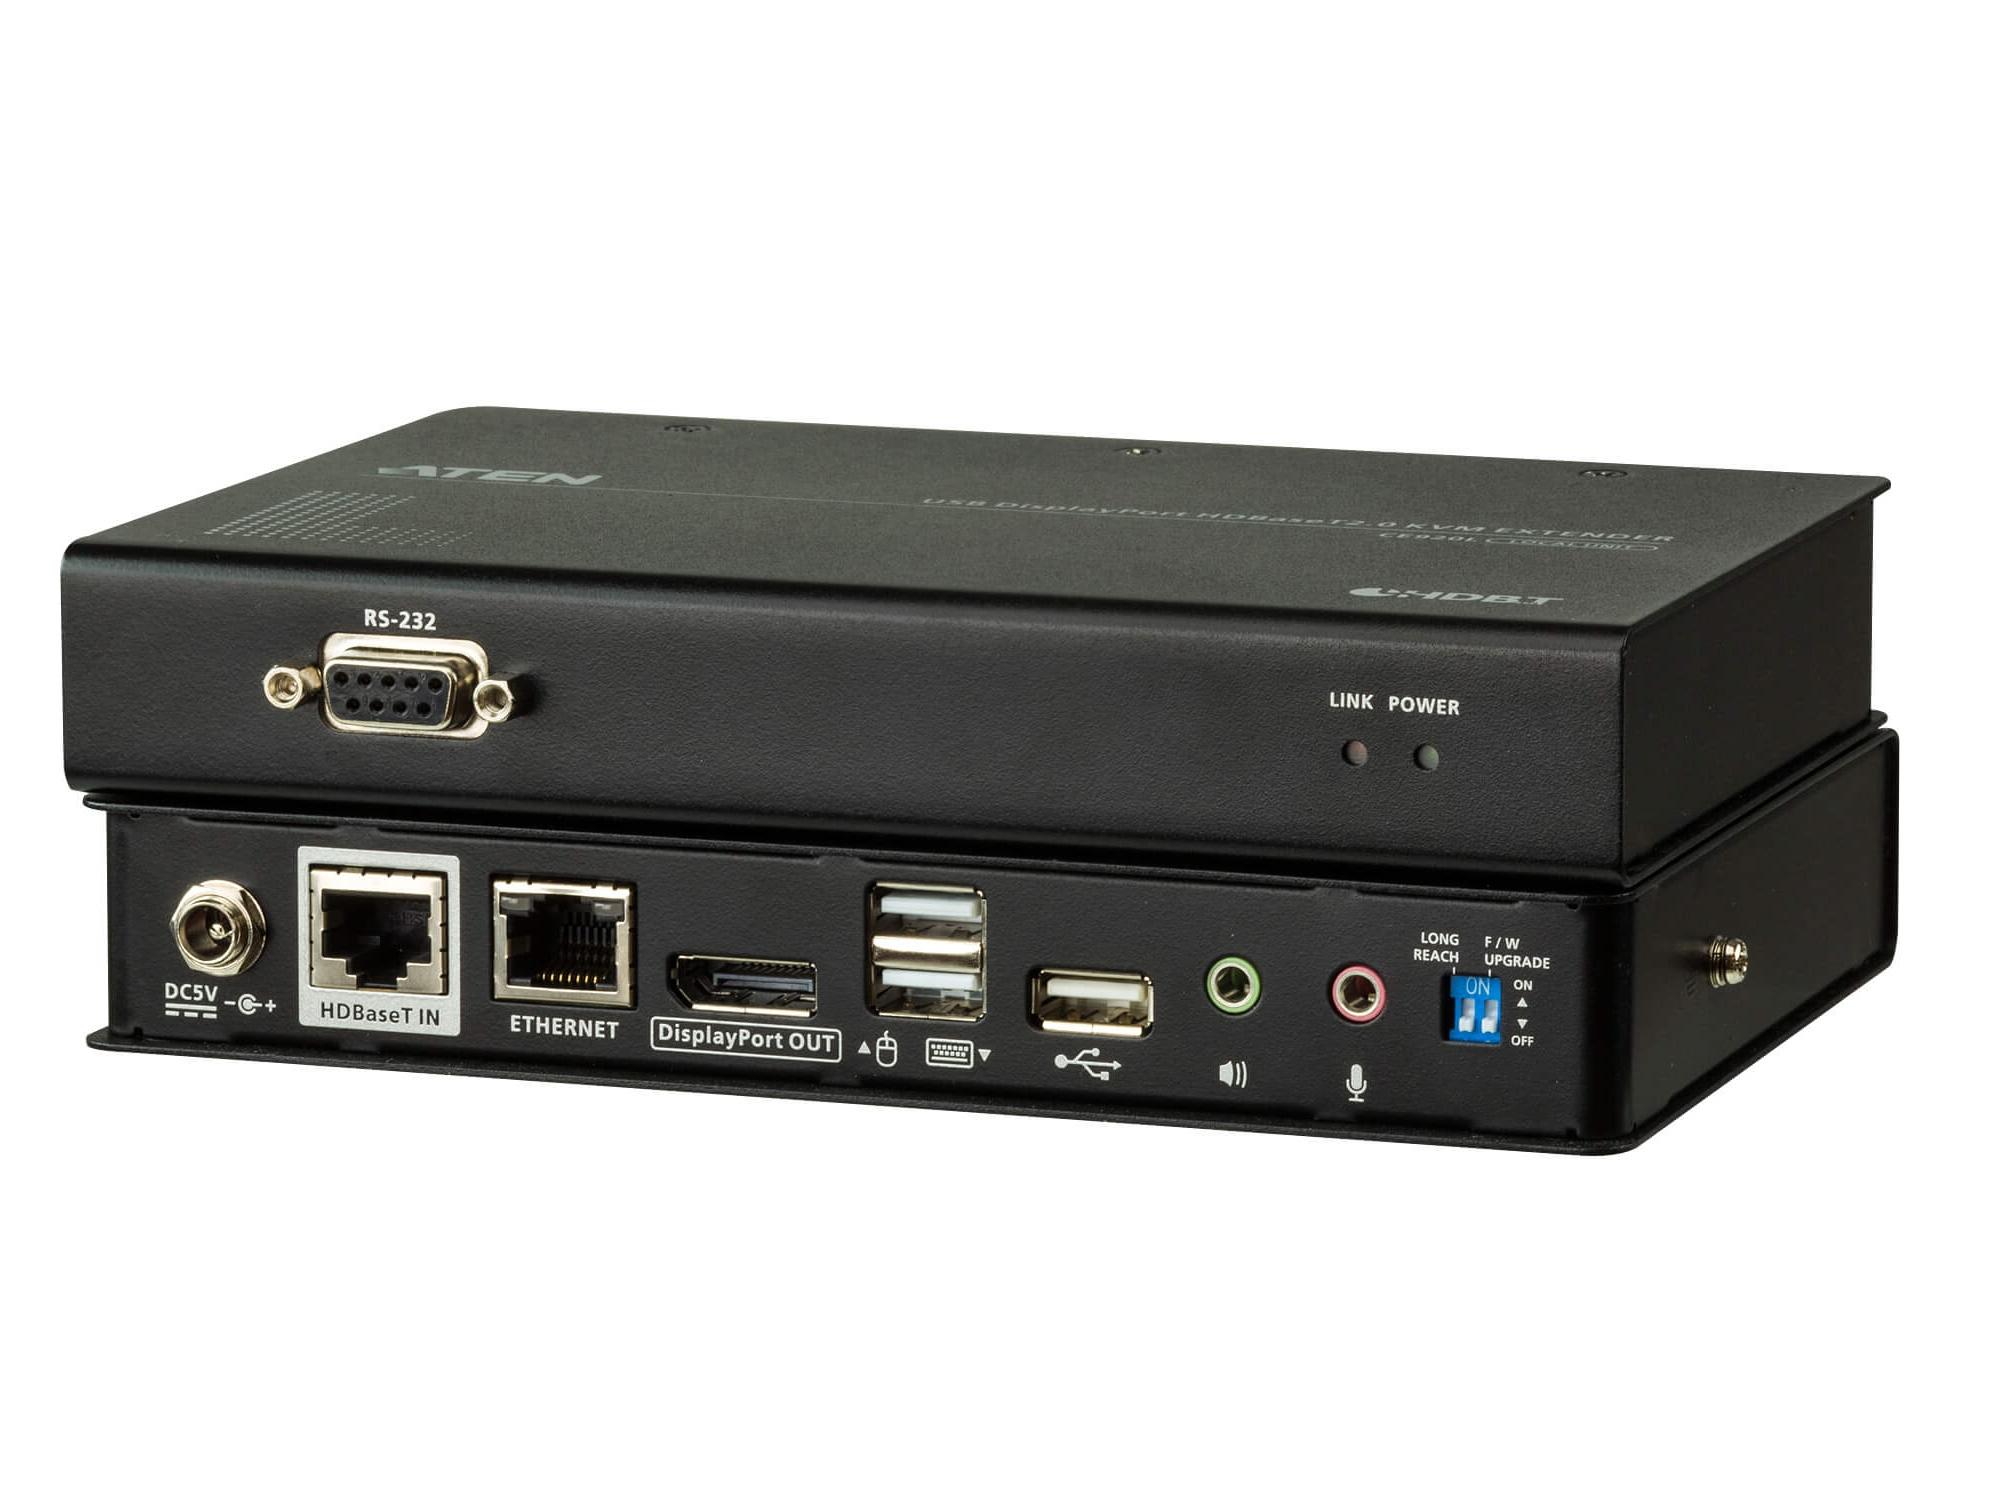 CE920 4K USB DisplayPort HDBaseT 2.0 KVM Extender (Transmitter/Receiver) Kit up to 100m by Aten